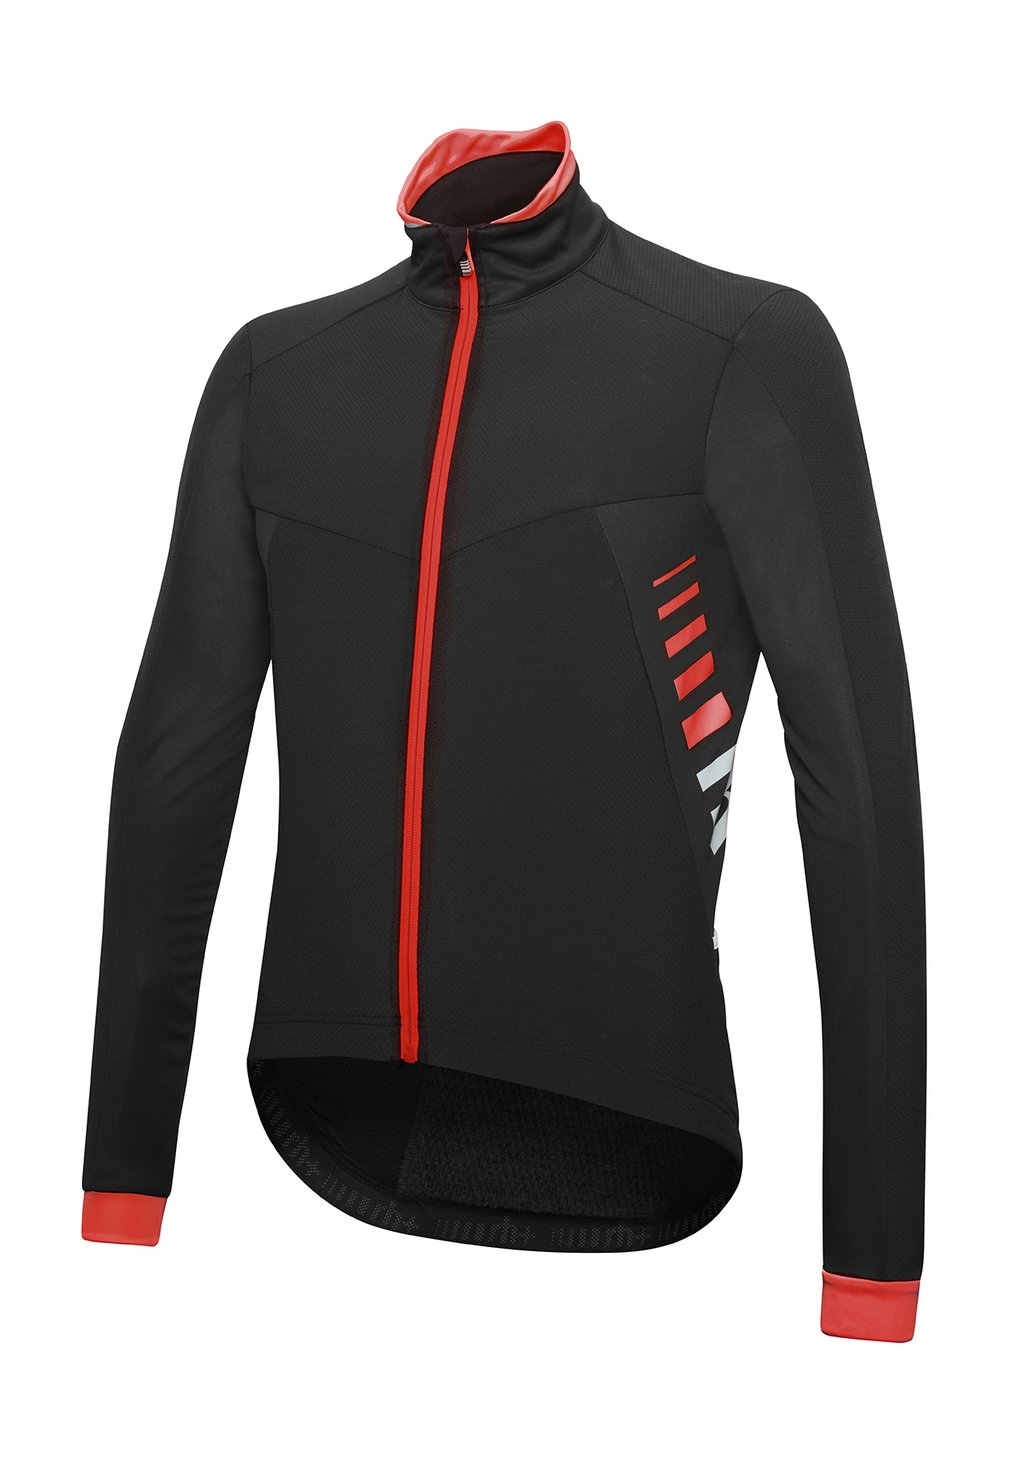 Куртка для бега LOGO ALFA PADDED RH+, цвет black red code reflex цена и фото